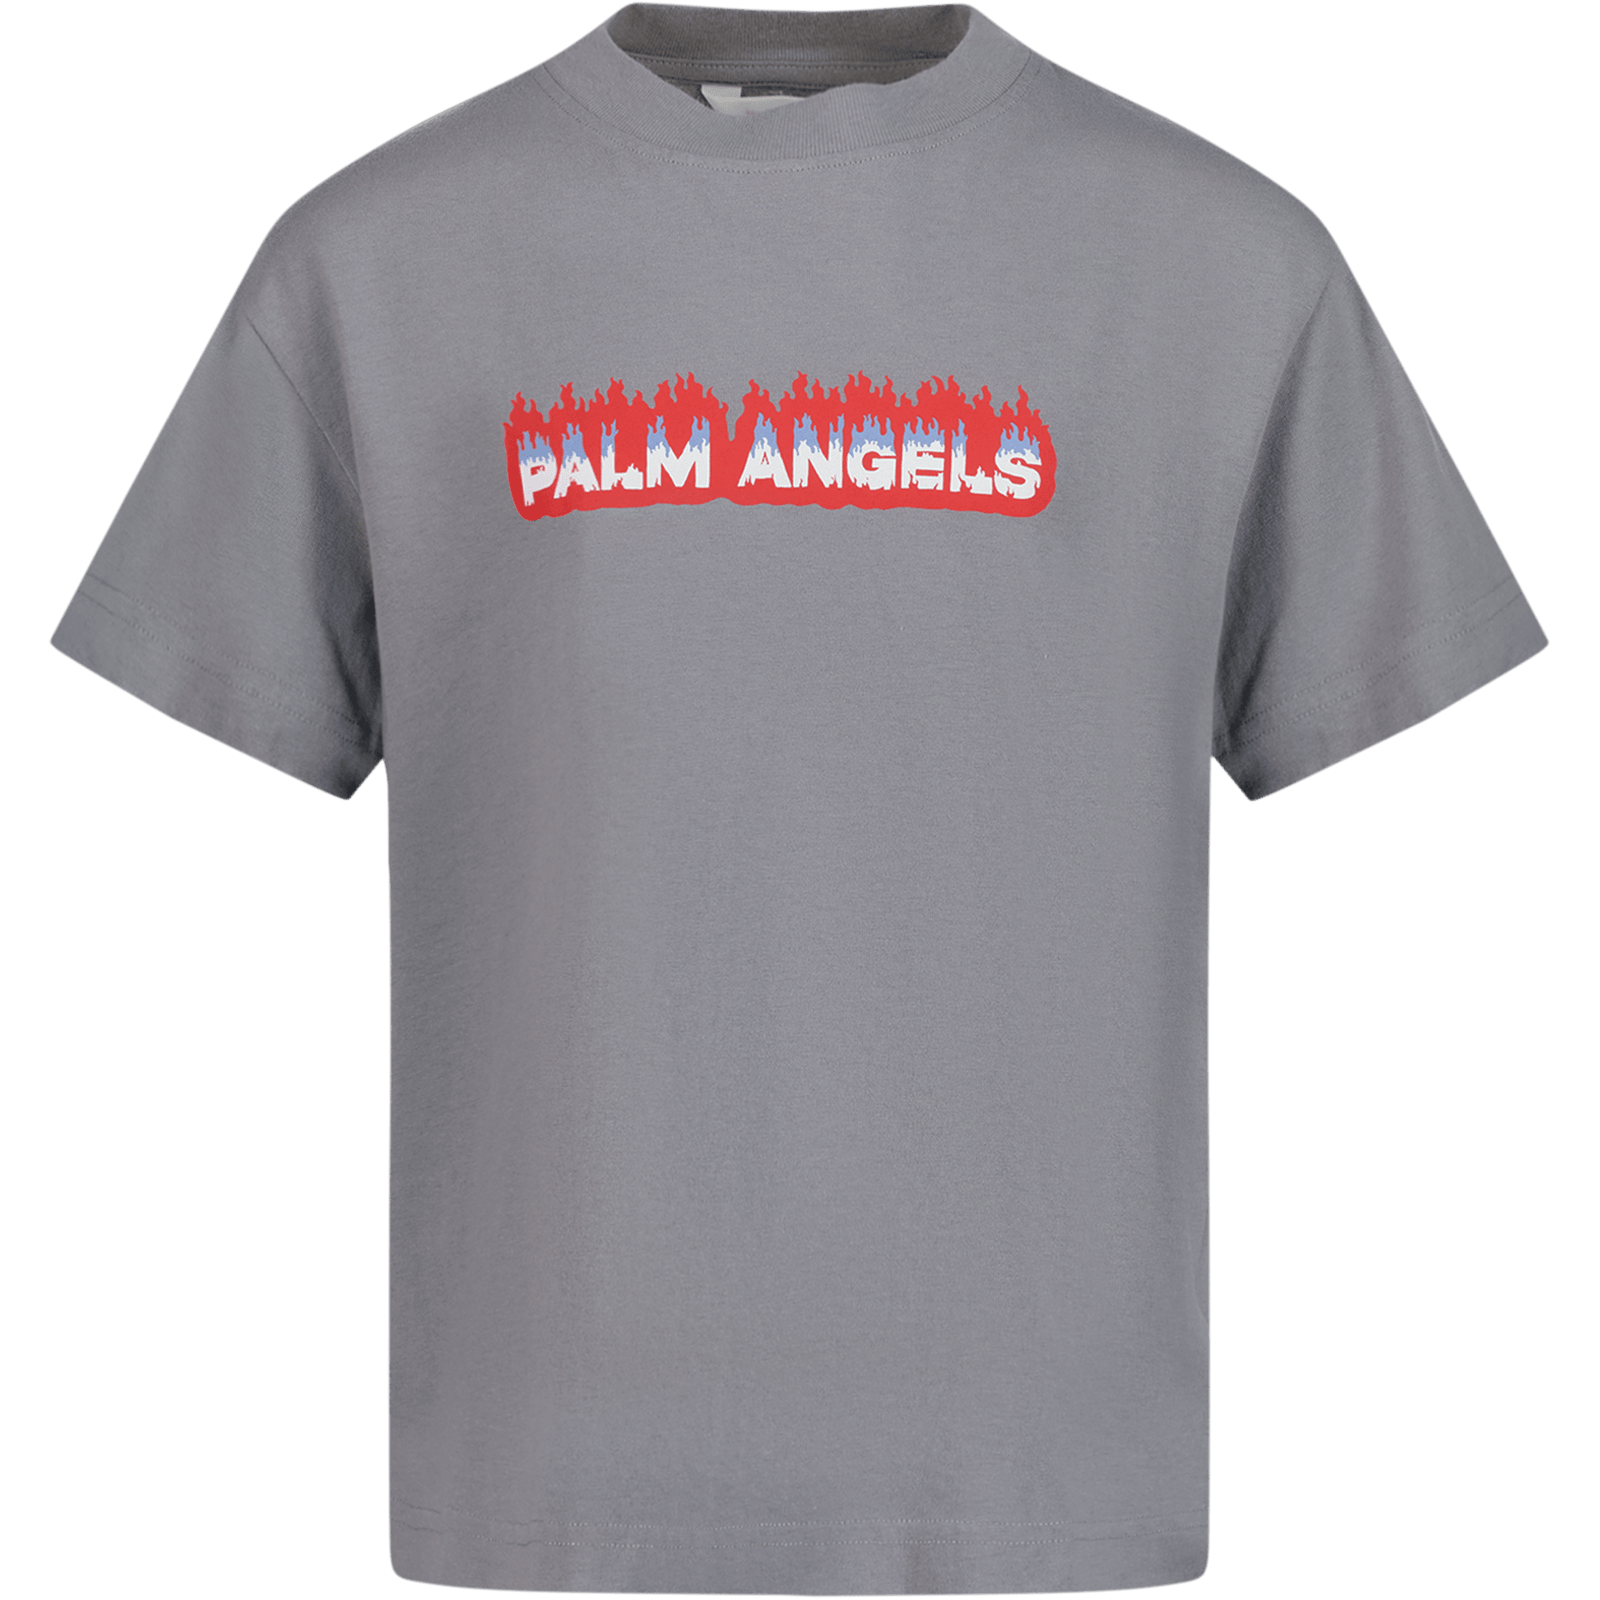 Palm Angels Kinder Jongens T-Shirt Grijs 4Y